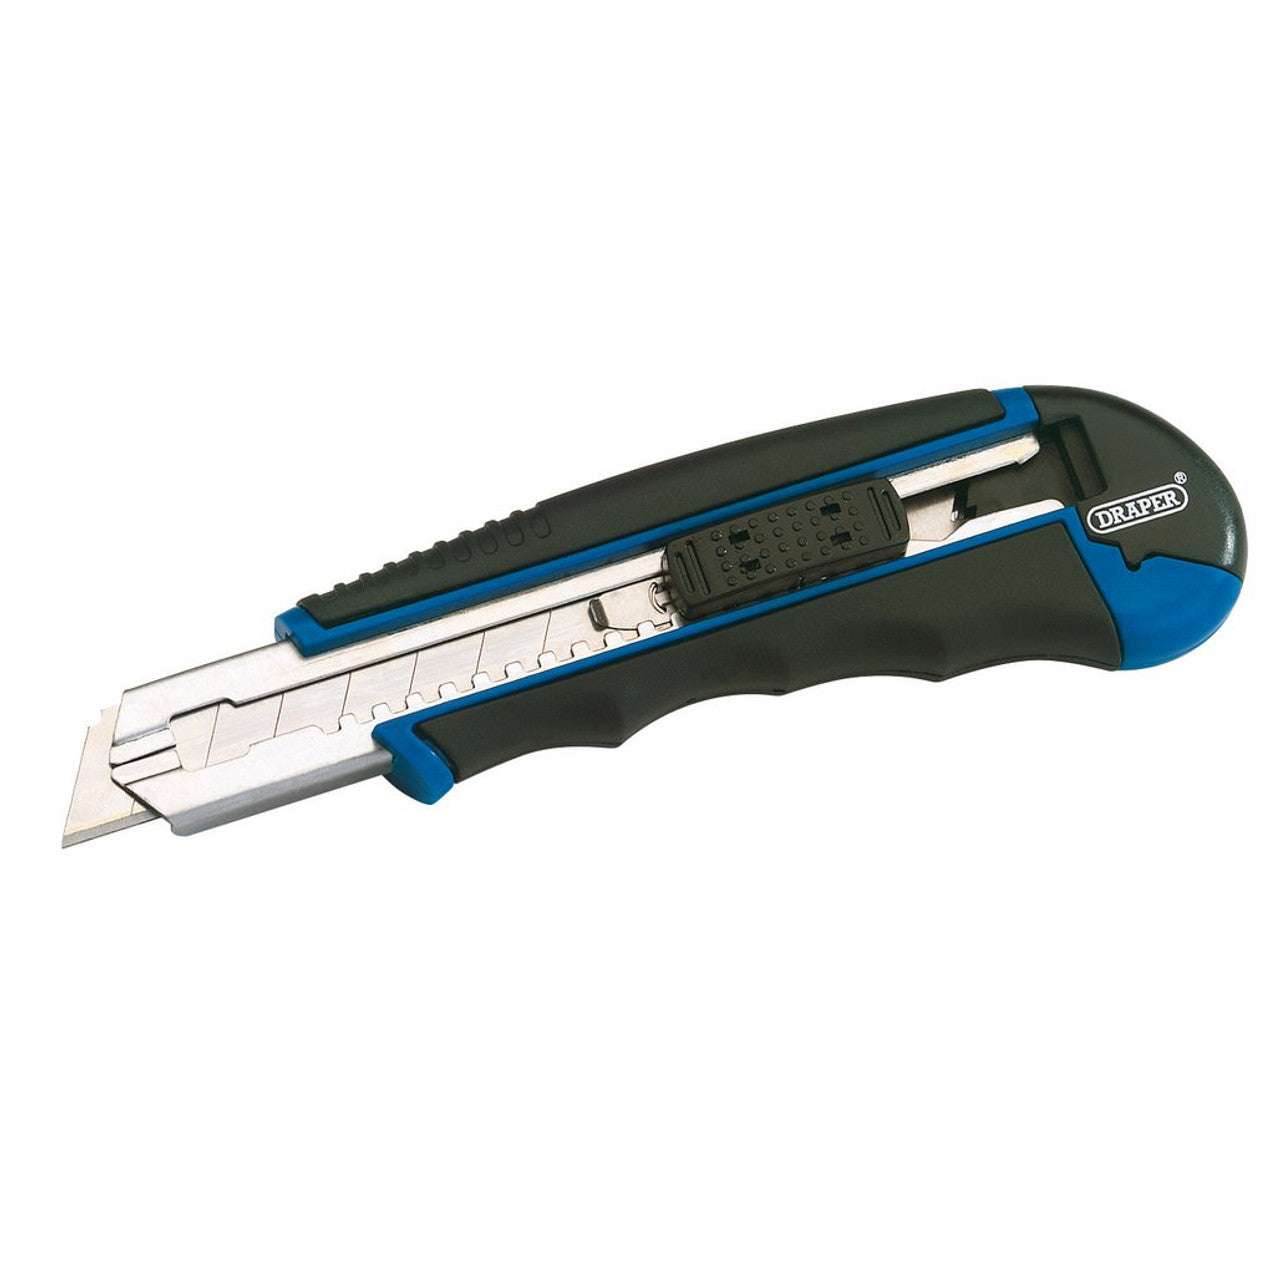 Draper 72144 Soft Grip Retractable Segment Blade Cutter with 7 Segment Blade, 18mm